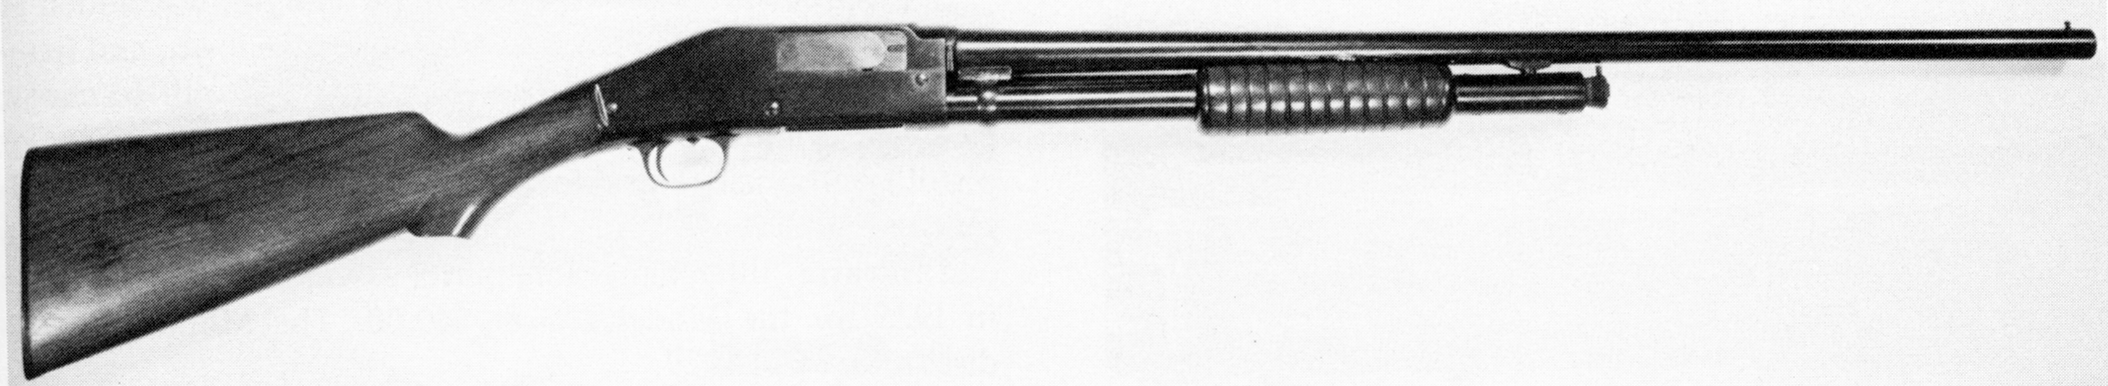 Model 44A